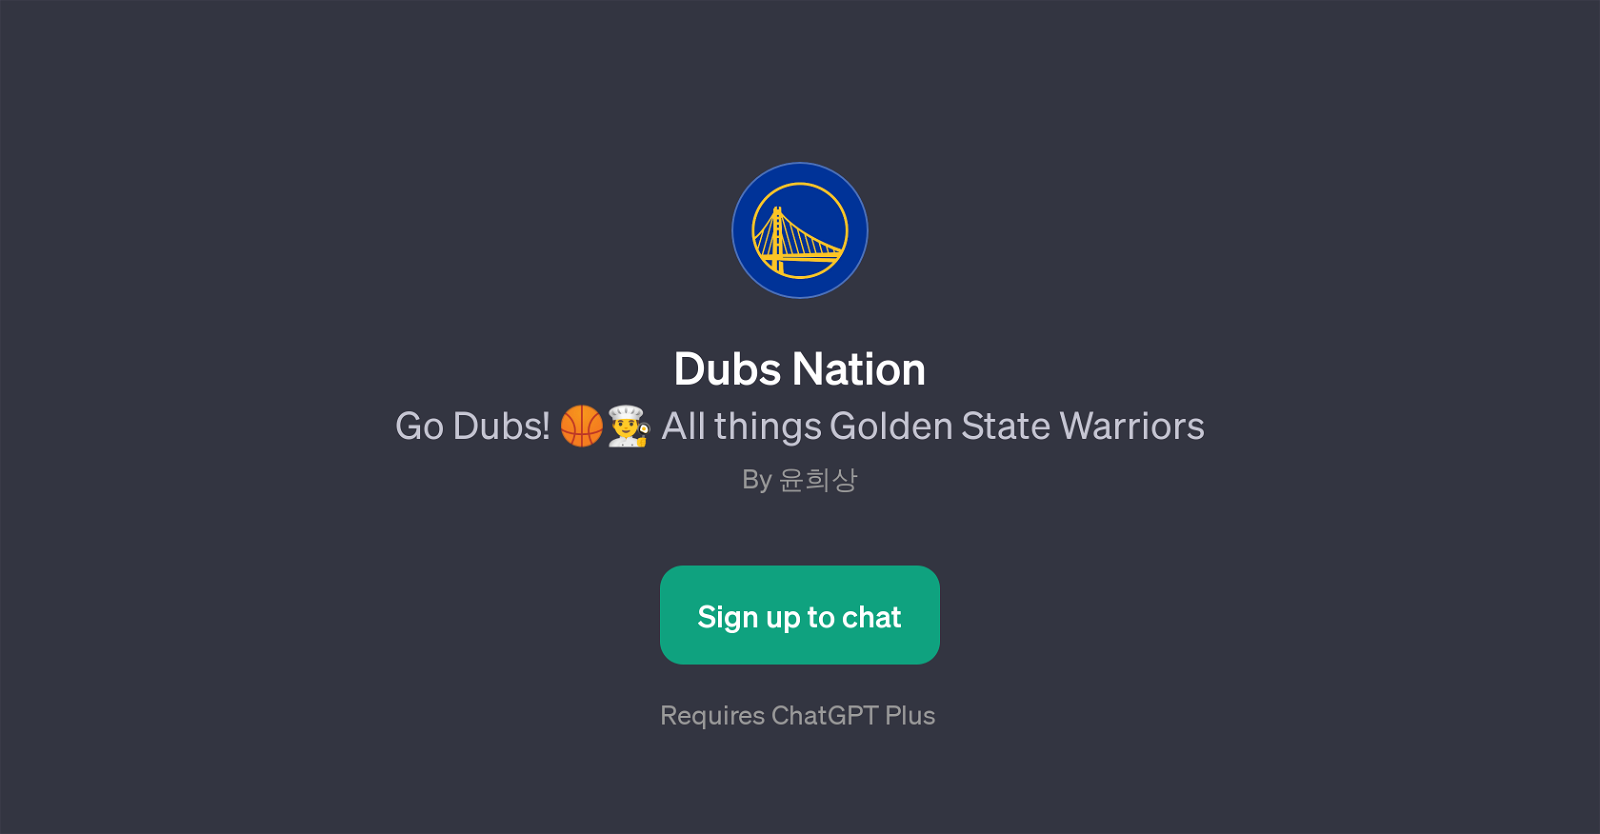 Dubs Nation website